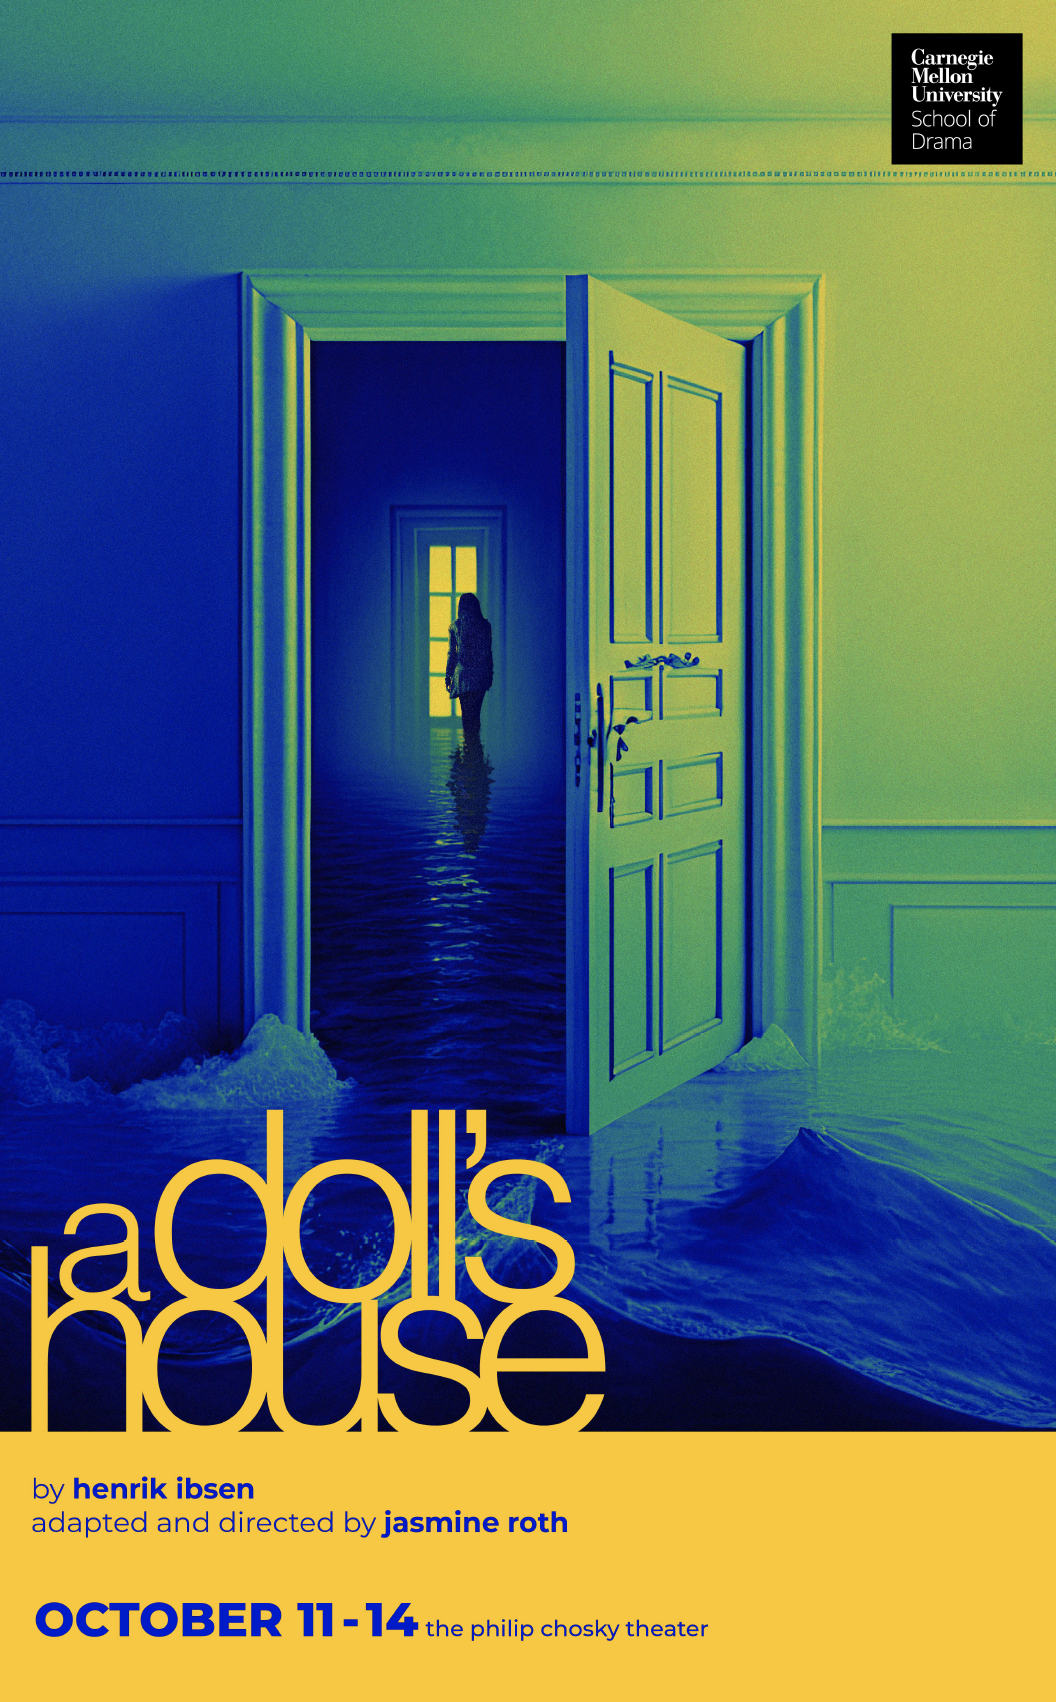 The Doll House (Short 2021) - IMDb